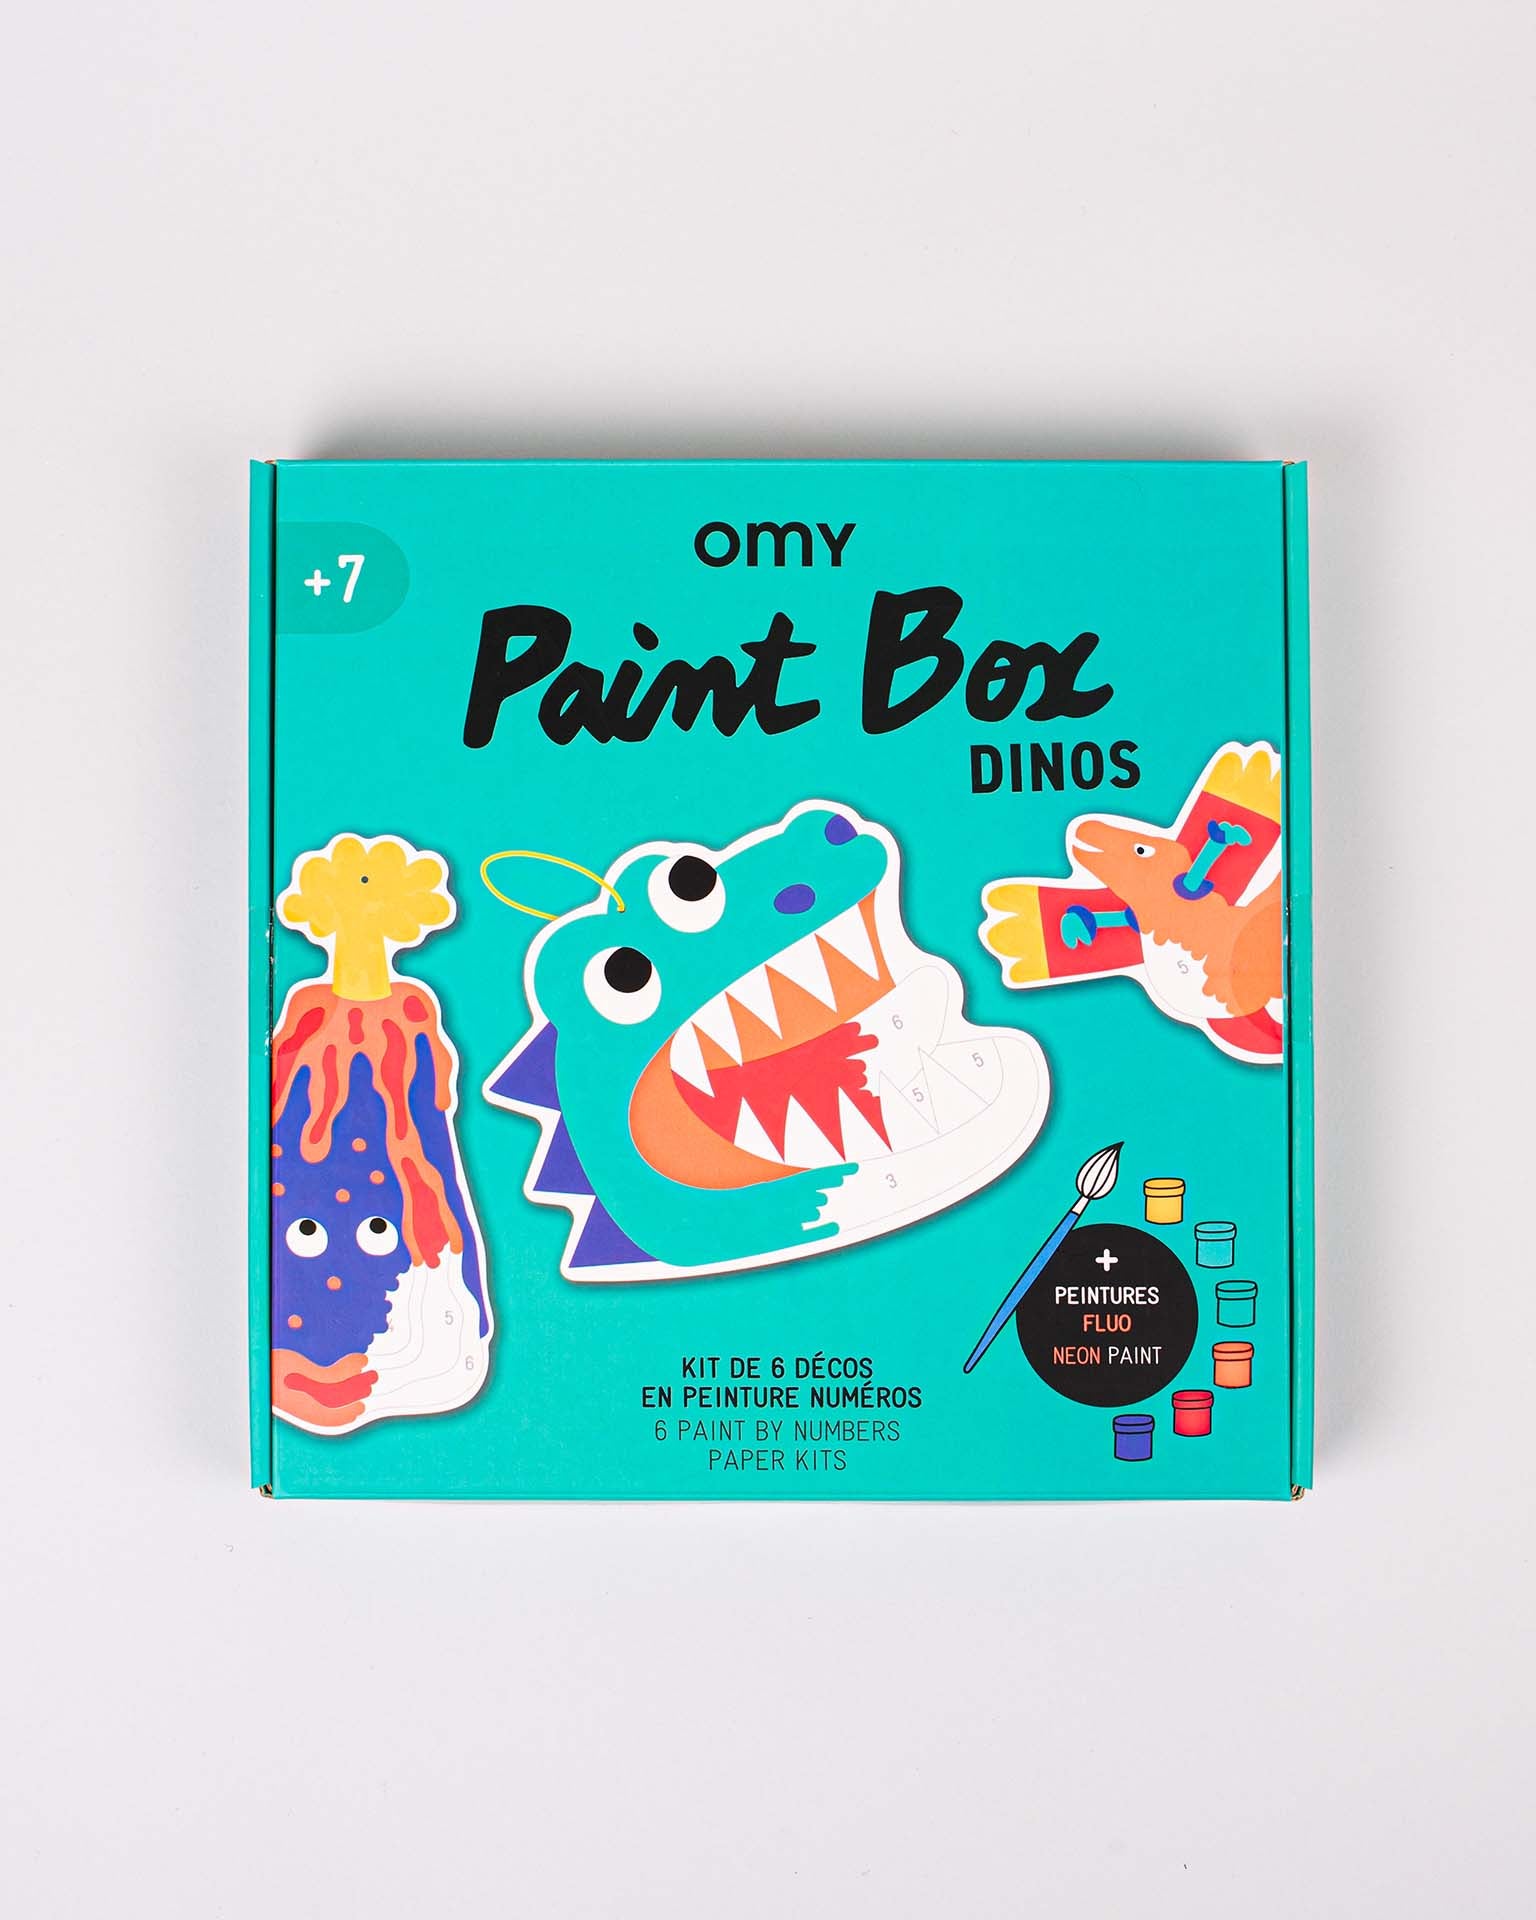 Little omy play dino paint box